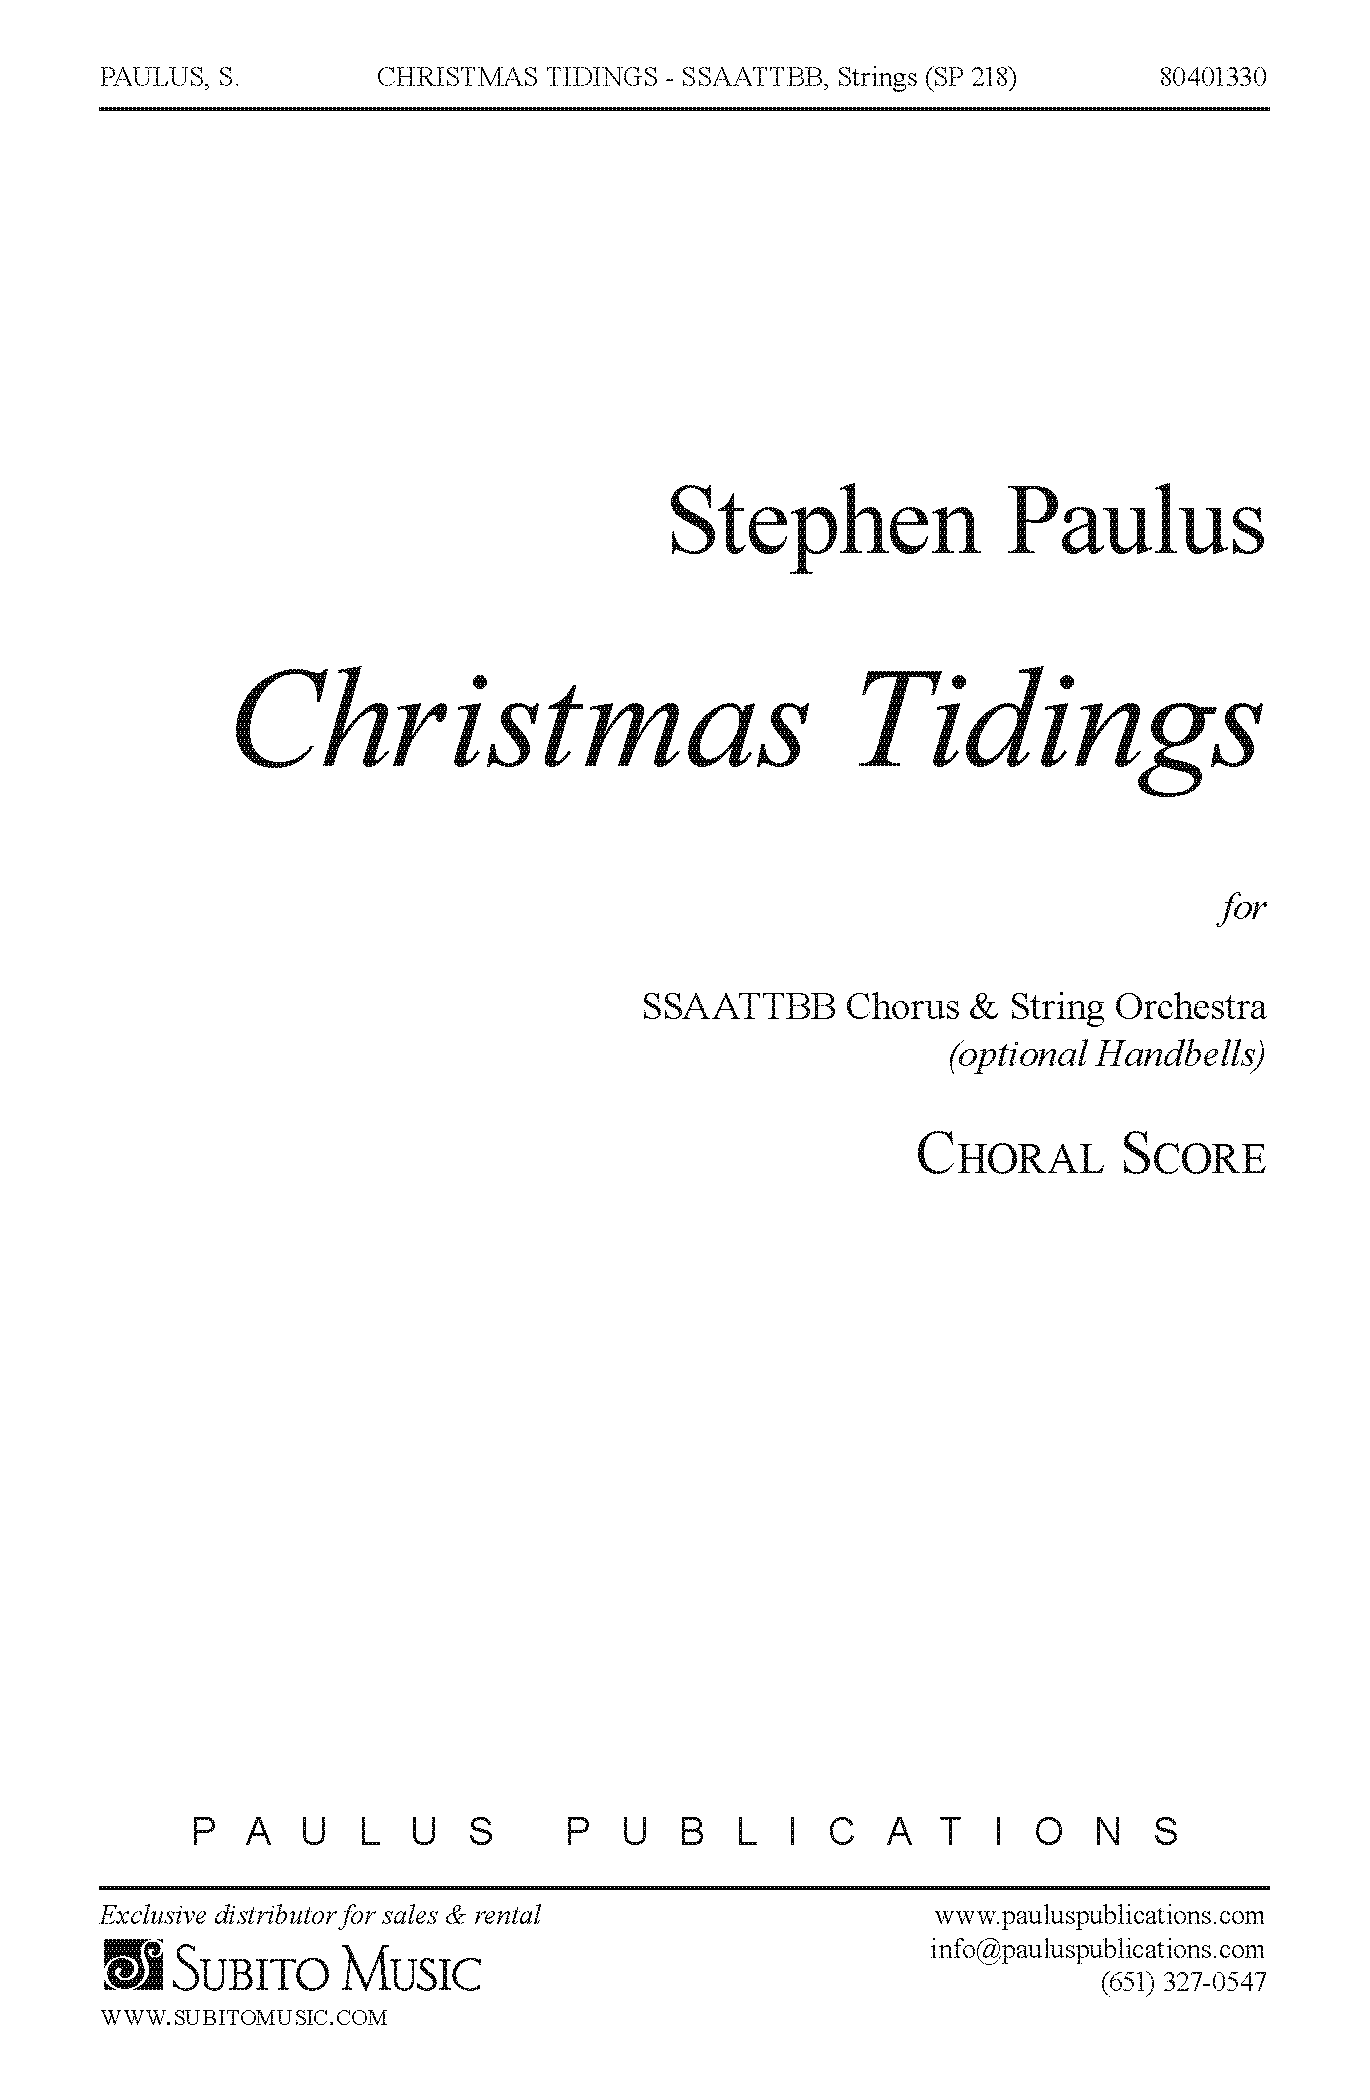 Christmas Tidings (parts) for SSAATTBB Chorus & String Orchestra (opt. Handbells)